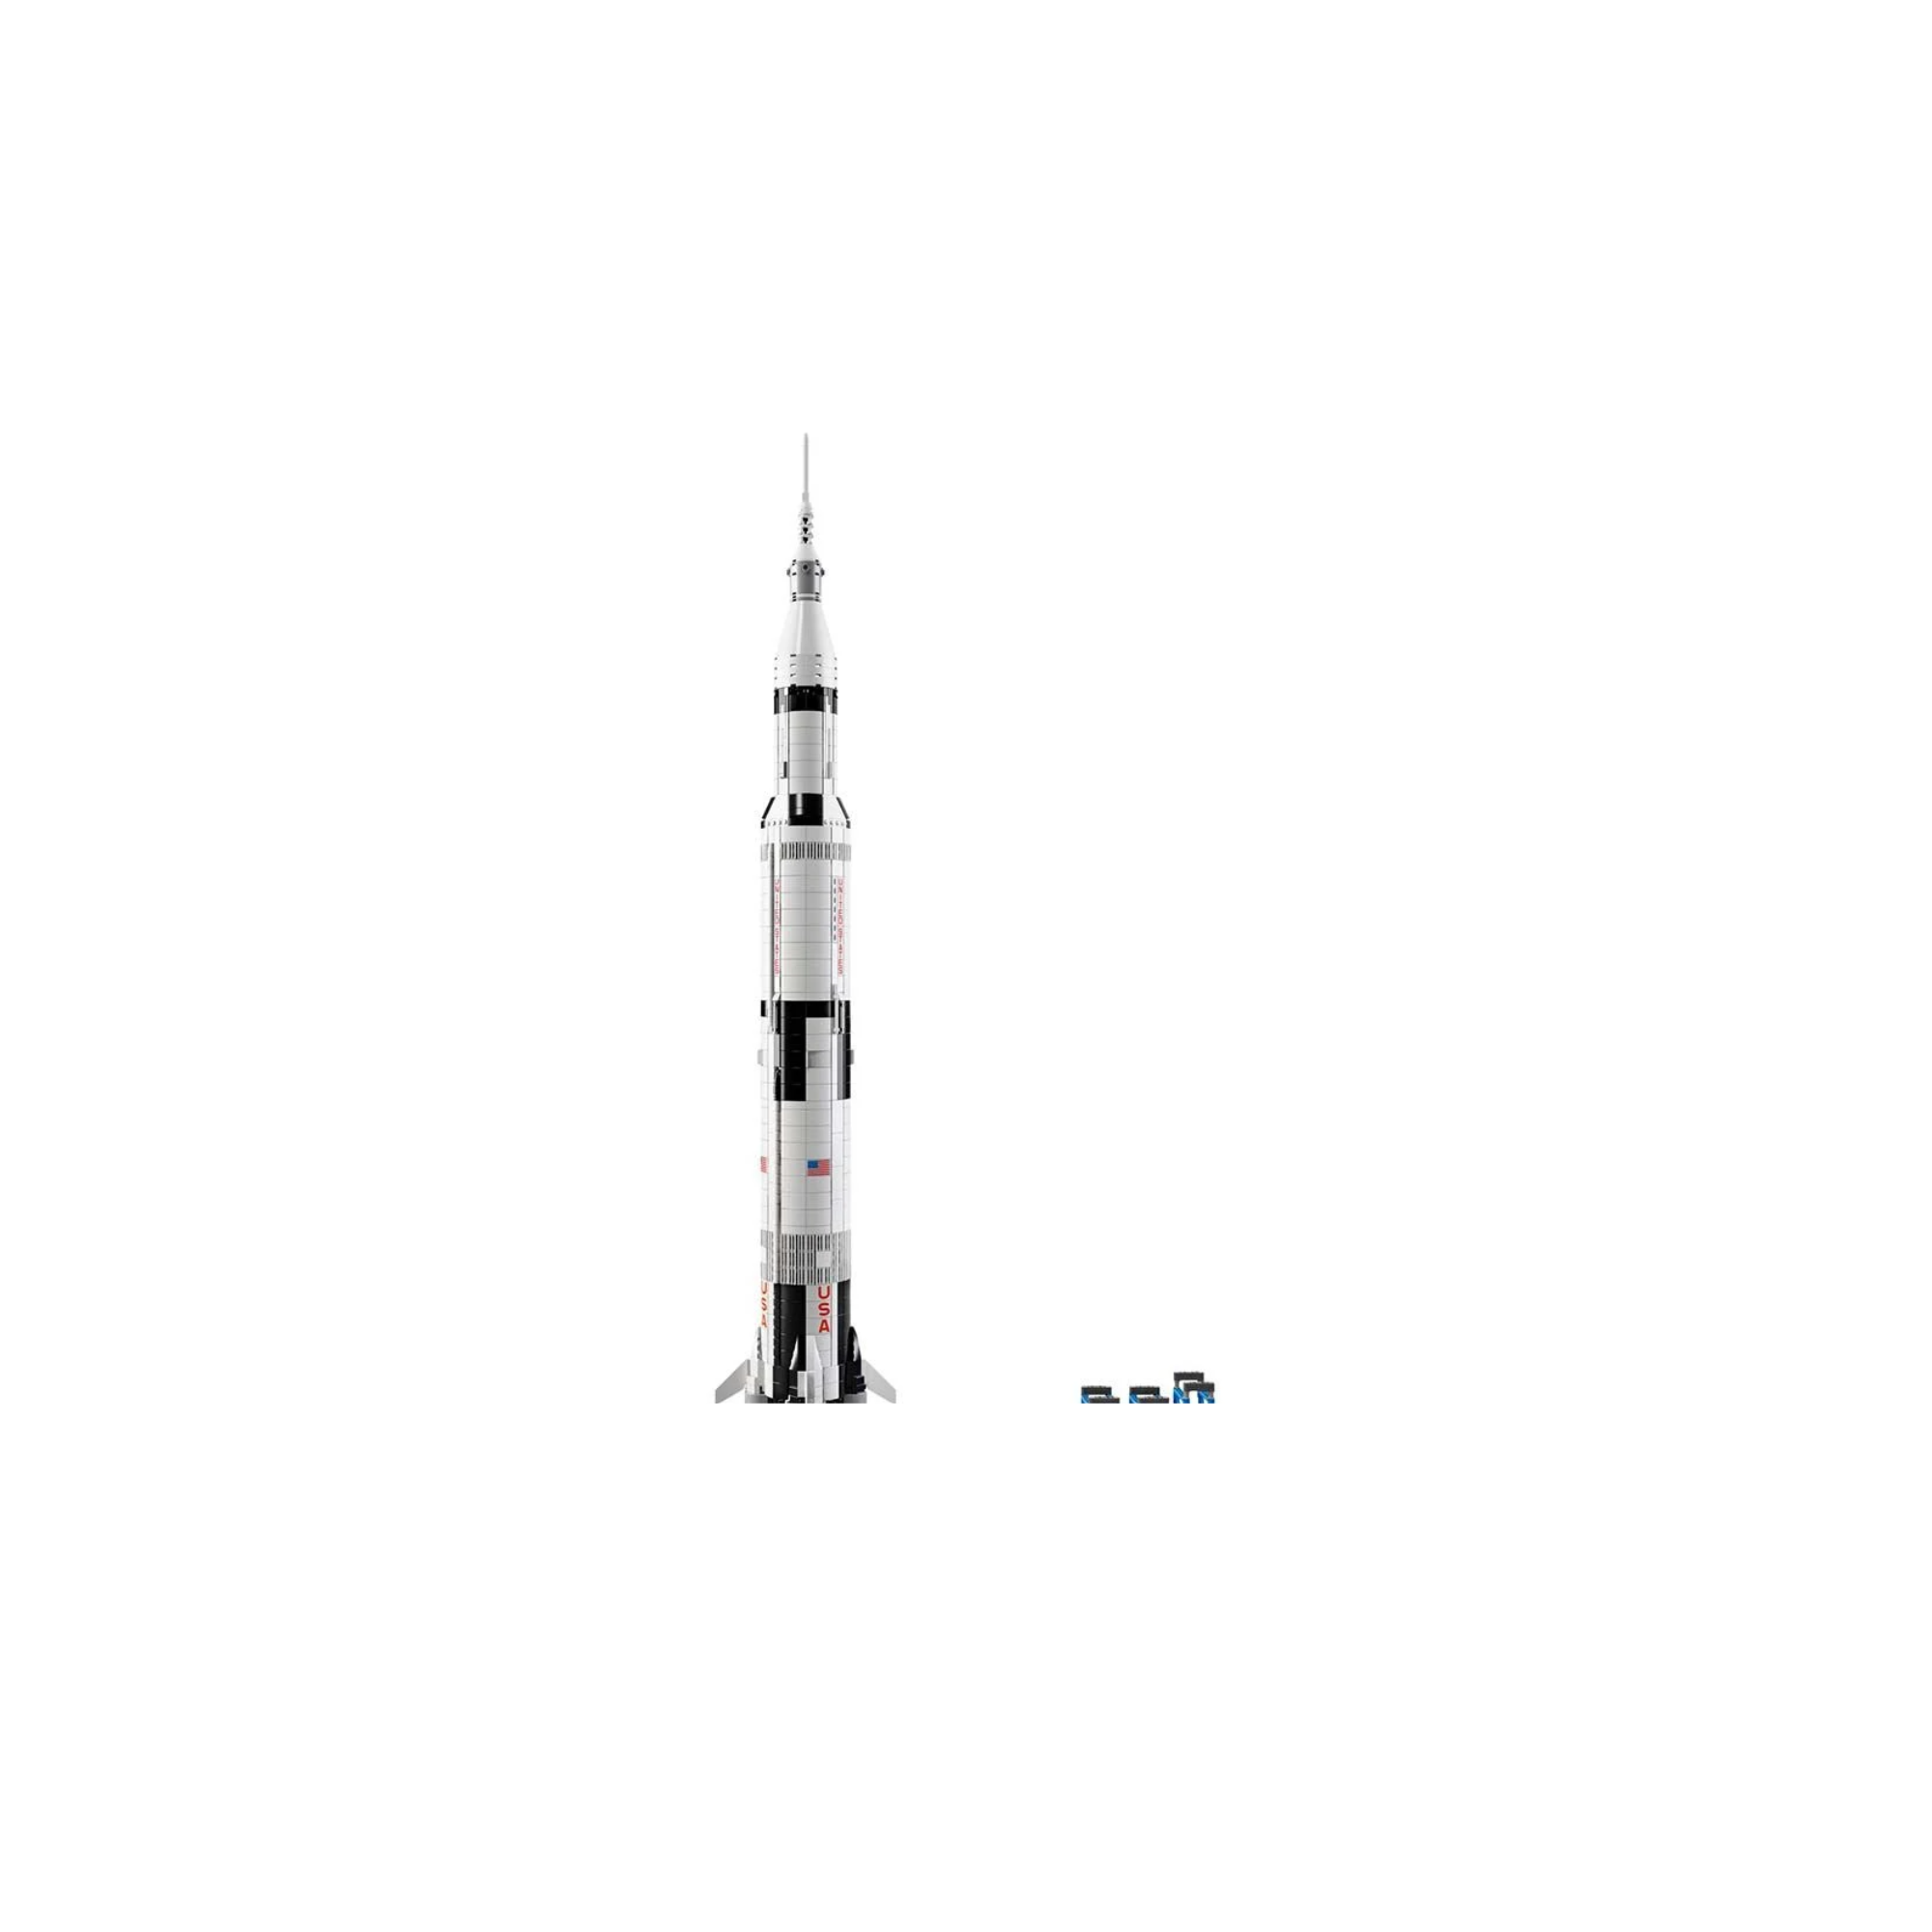 LEGO IDEAS NASA Apollo Saturn V